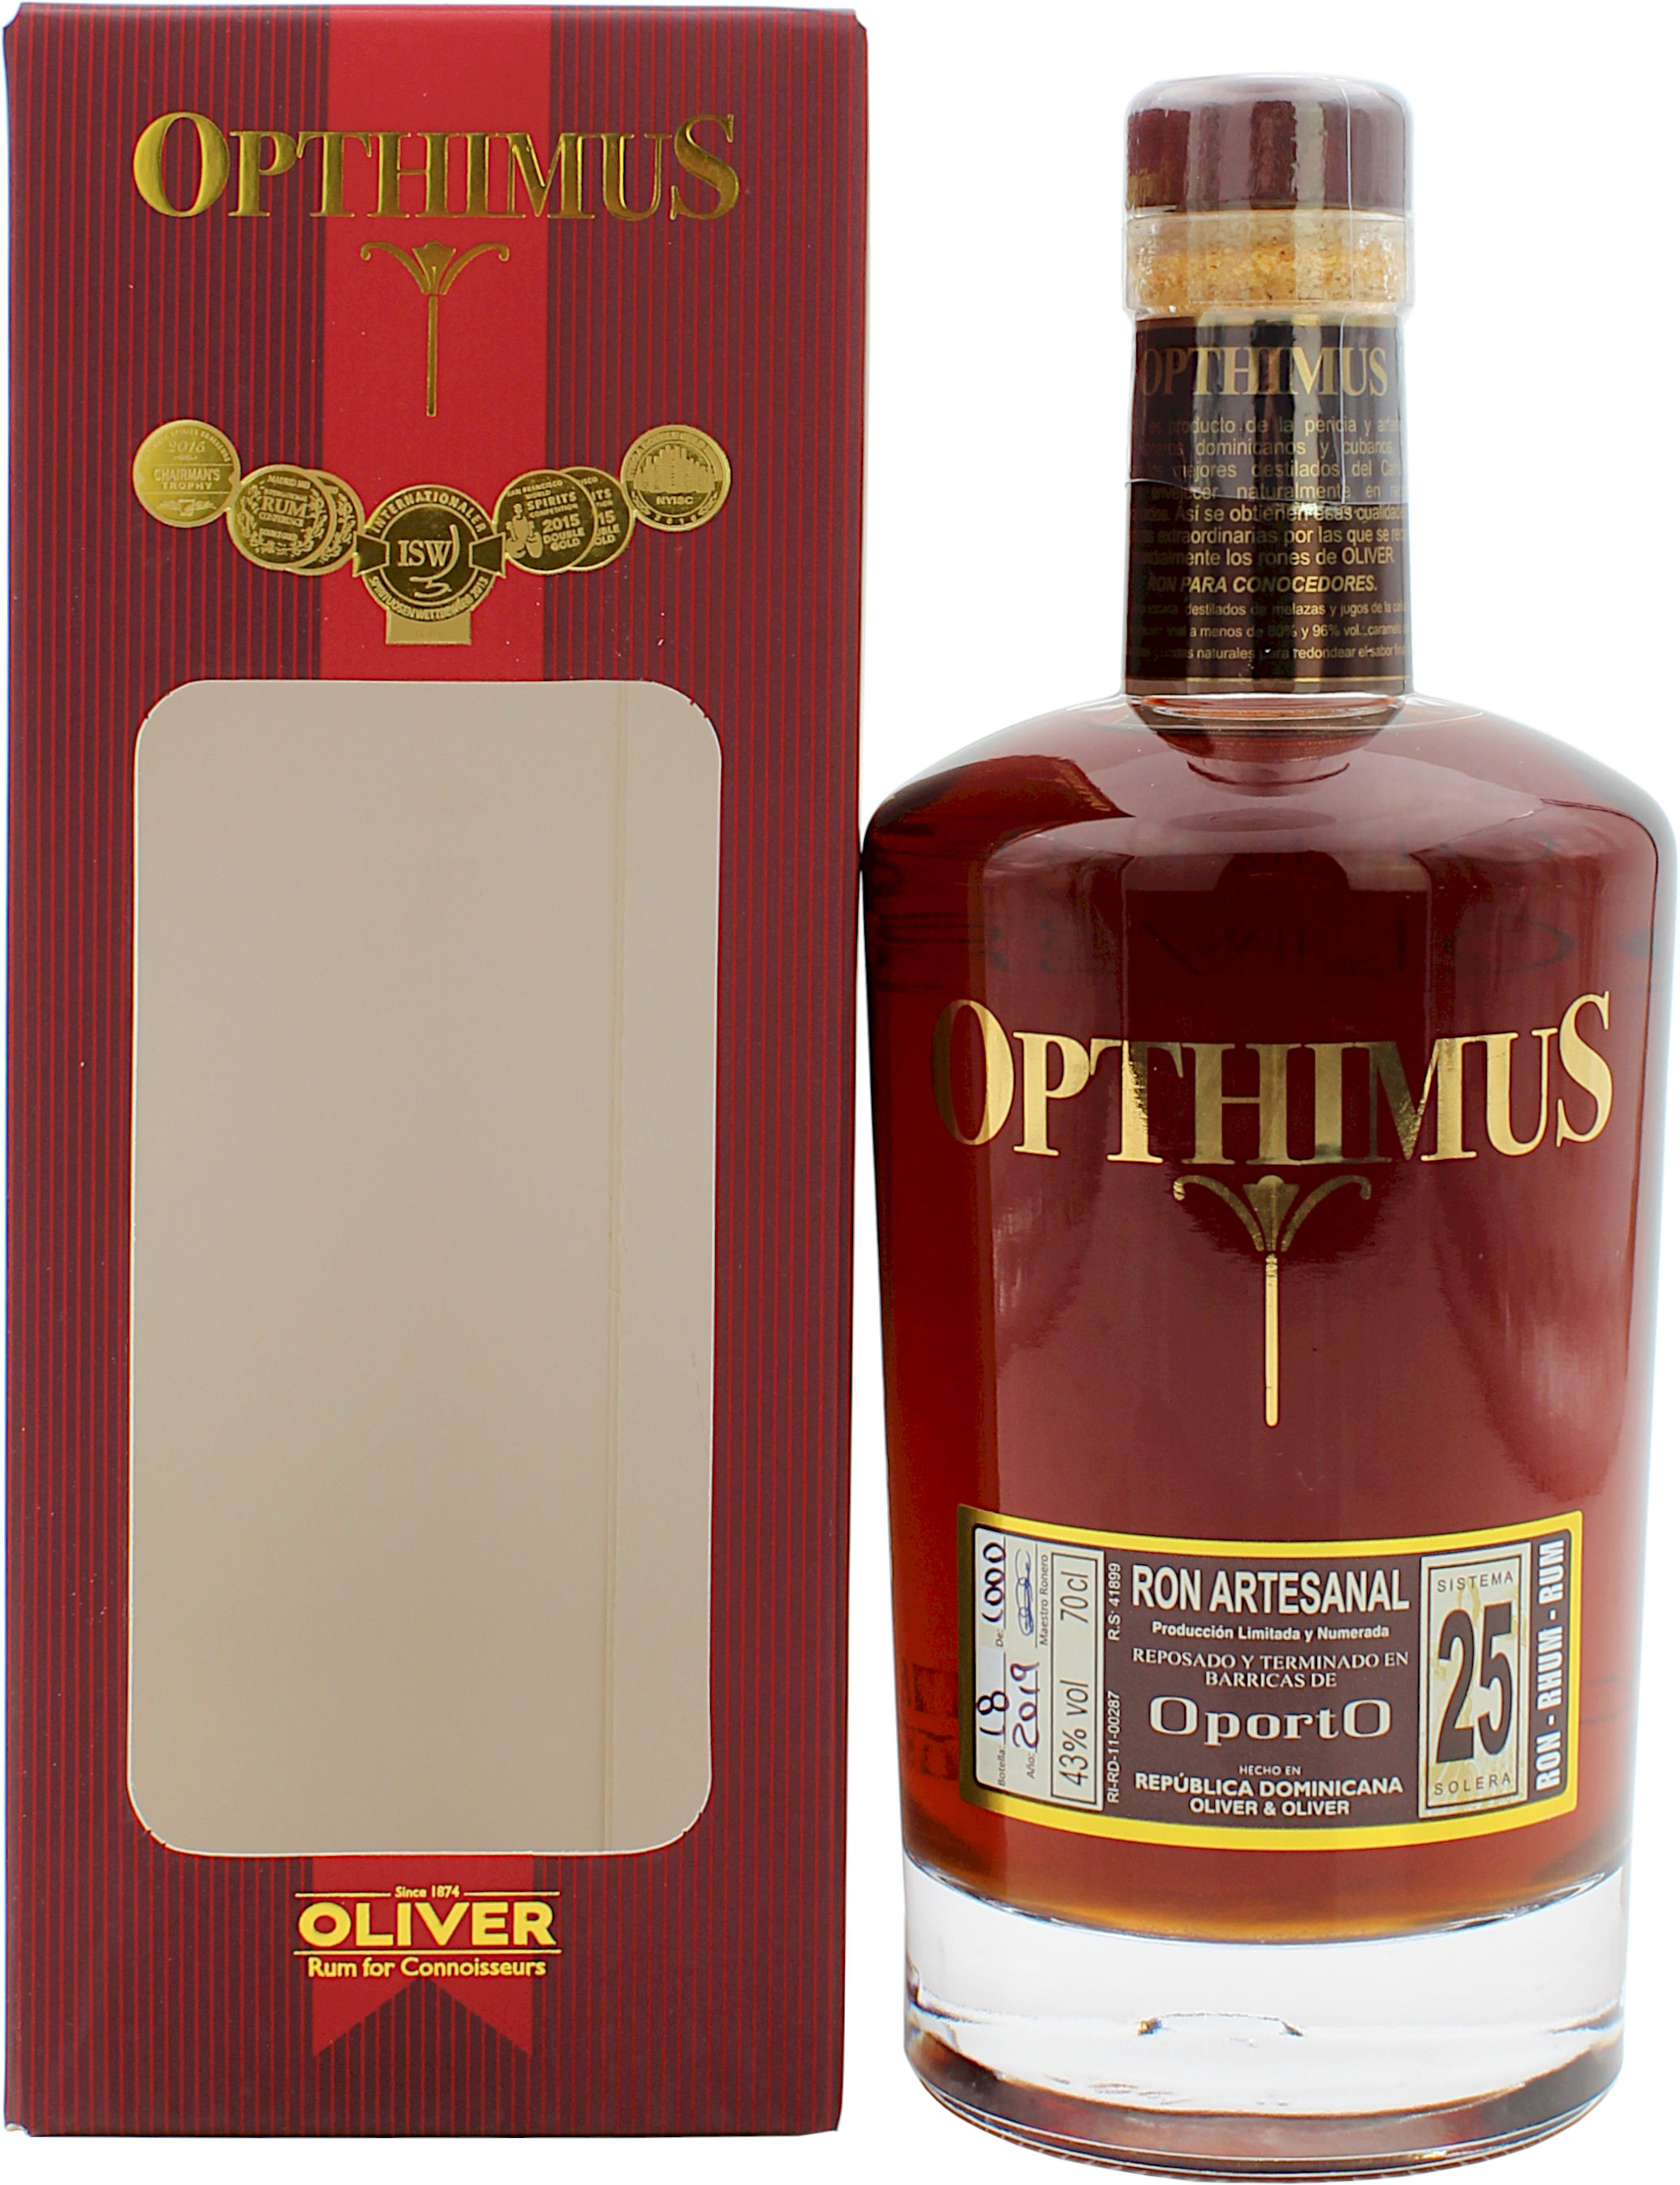 Opthimus 25 Jahre Oporto Rum 43.0% 0,7l